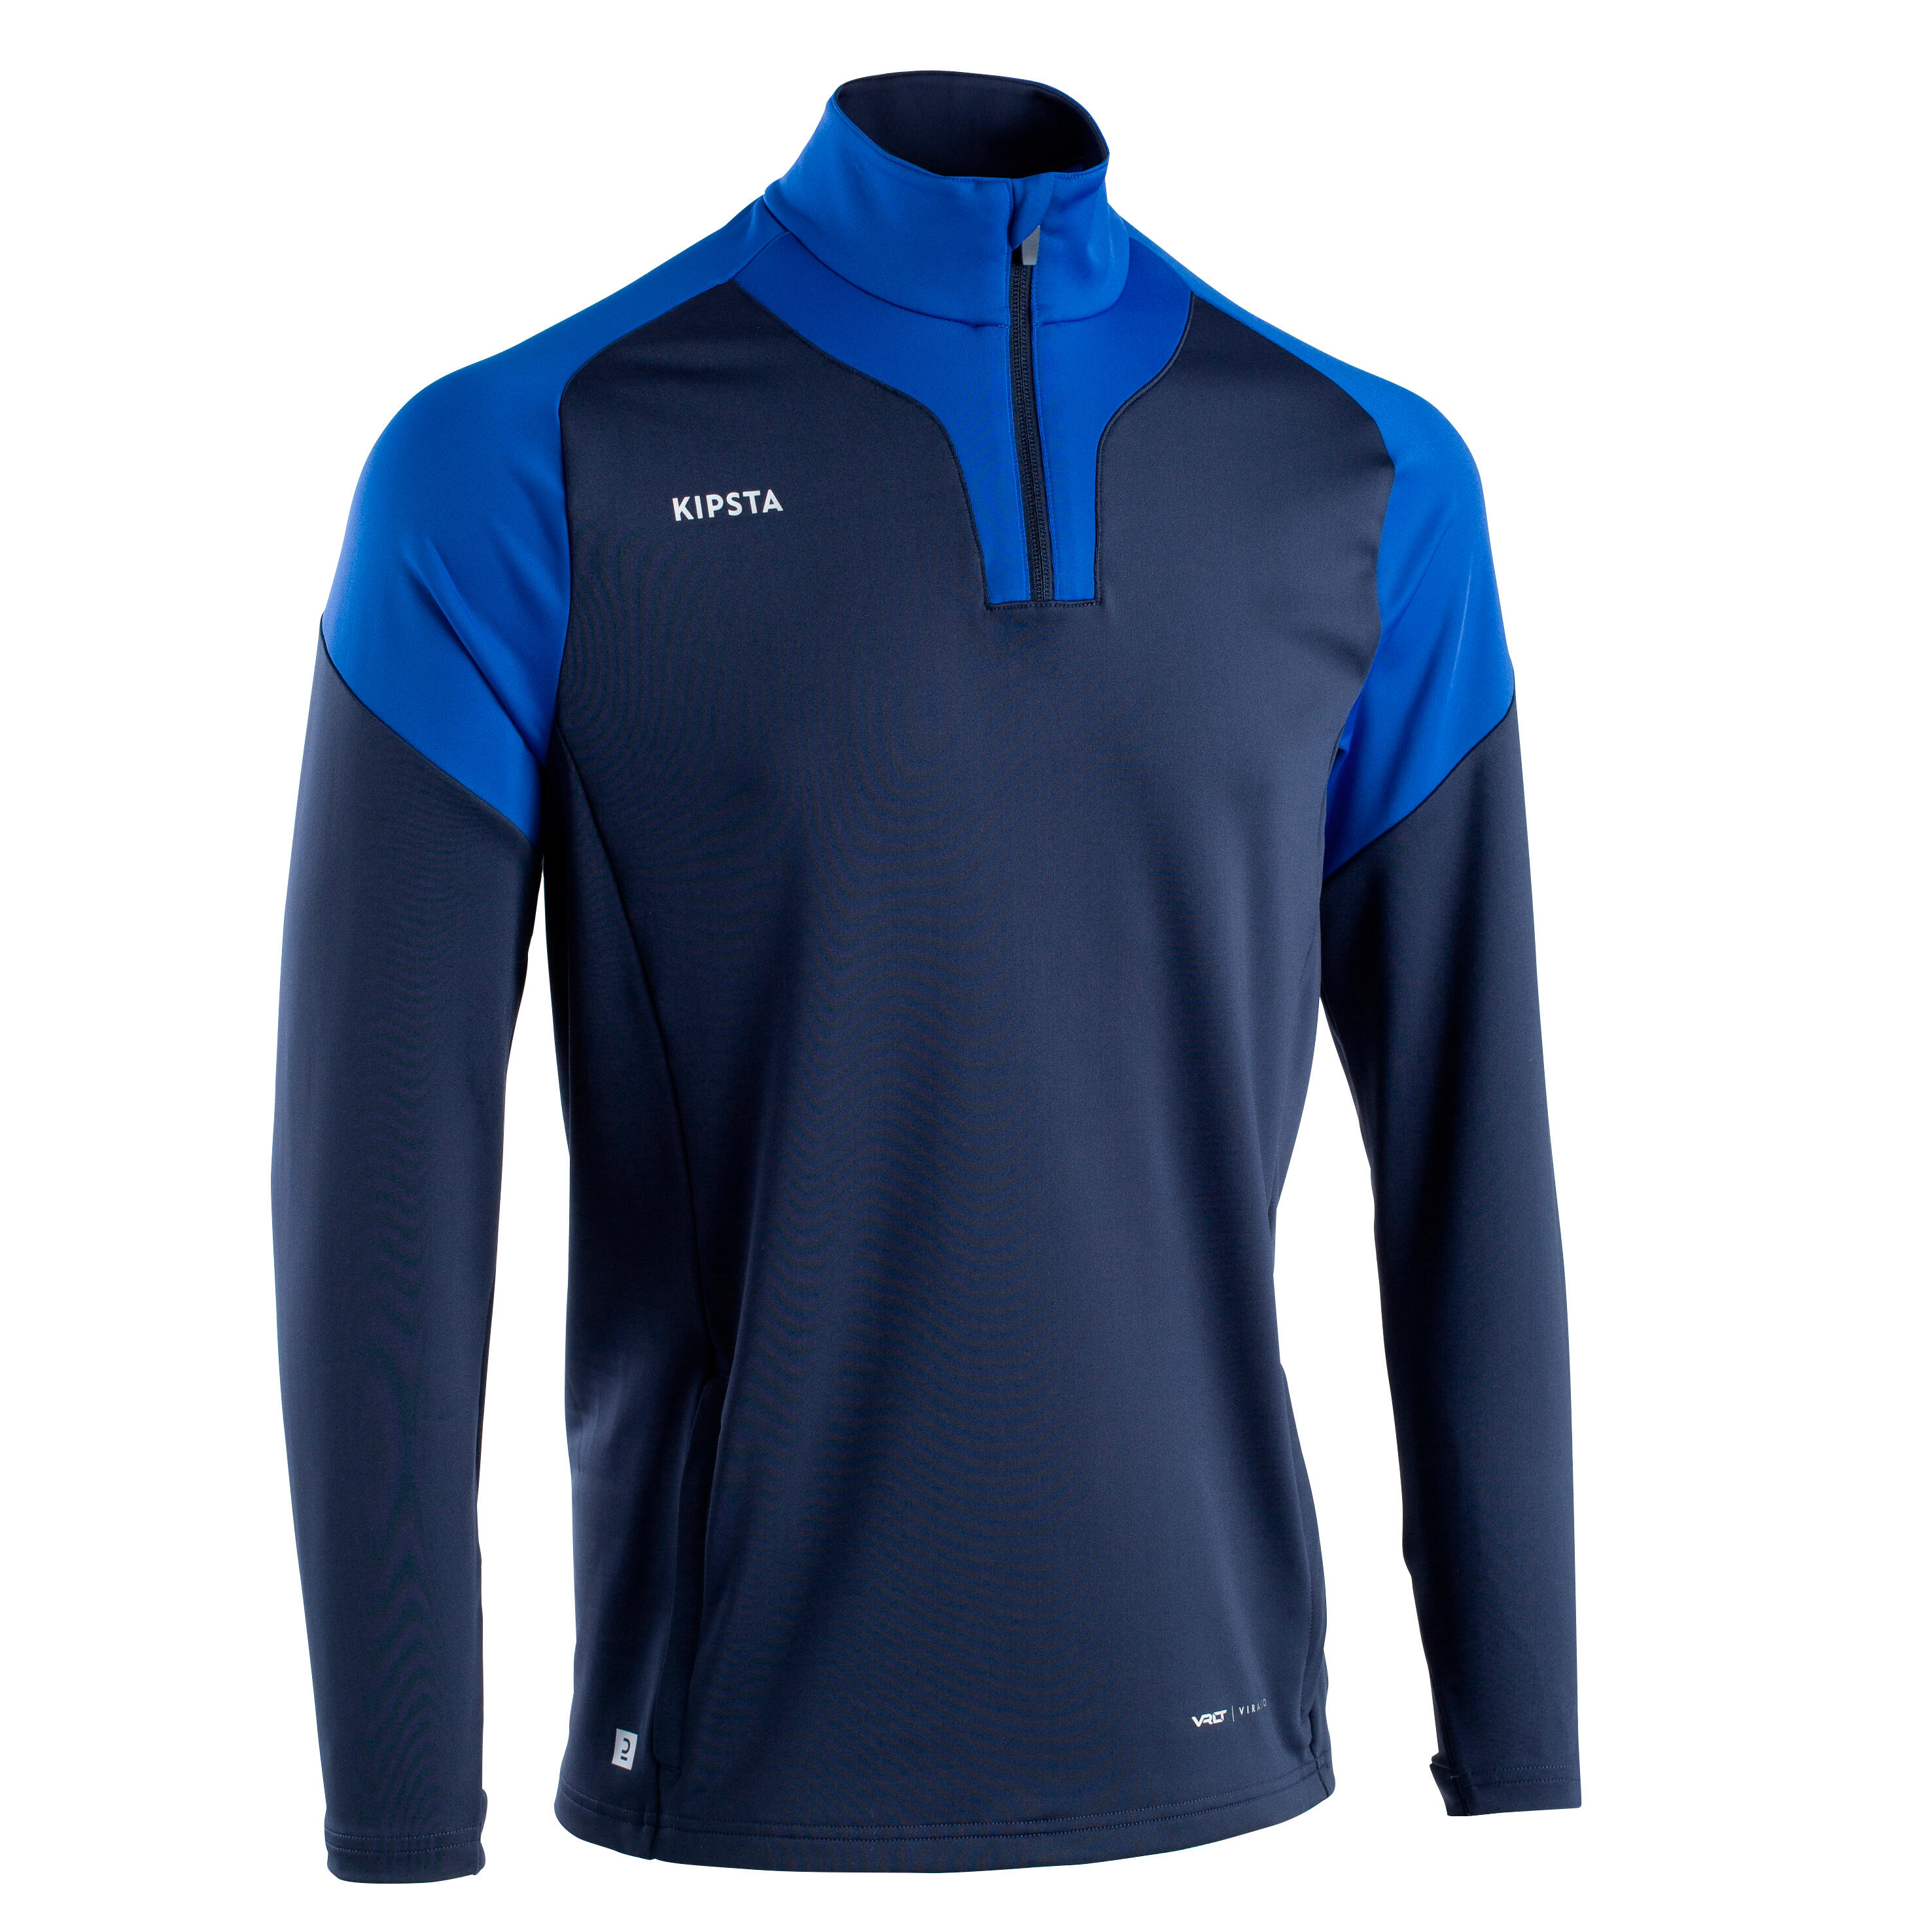 KIPSTA 1/2 Zip Football Sweatshirt Viralto Club - Navy and Blue.